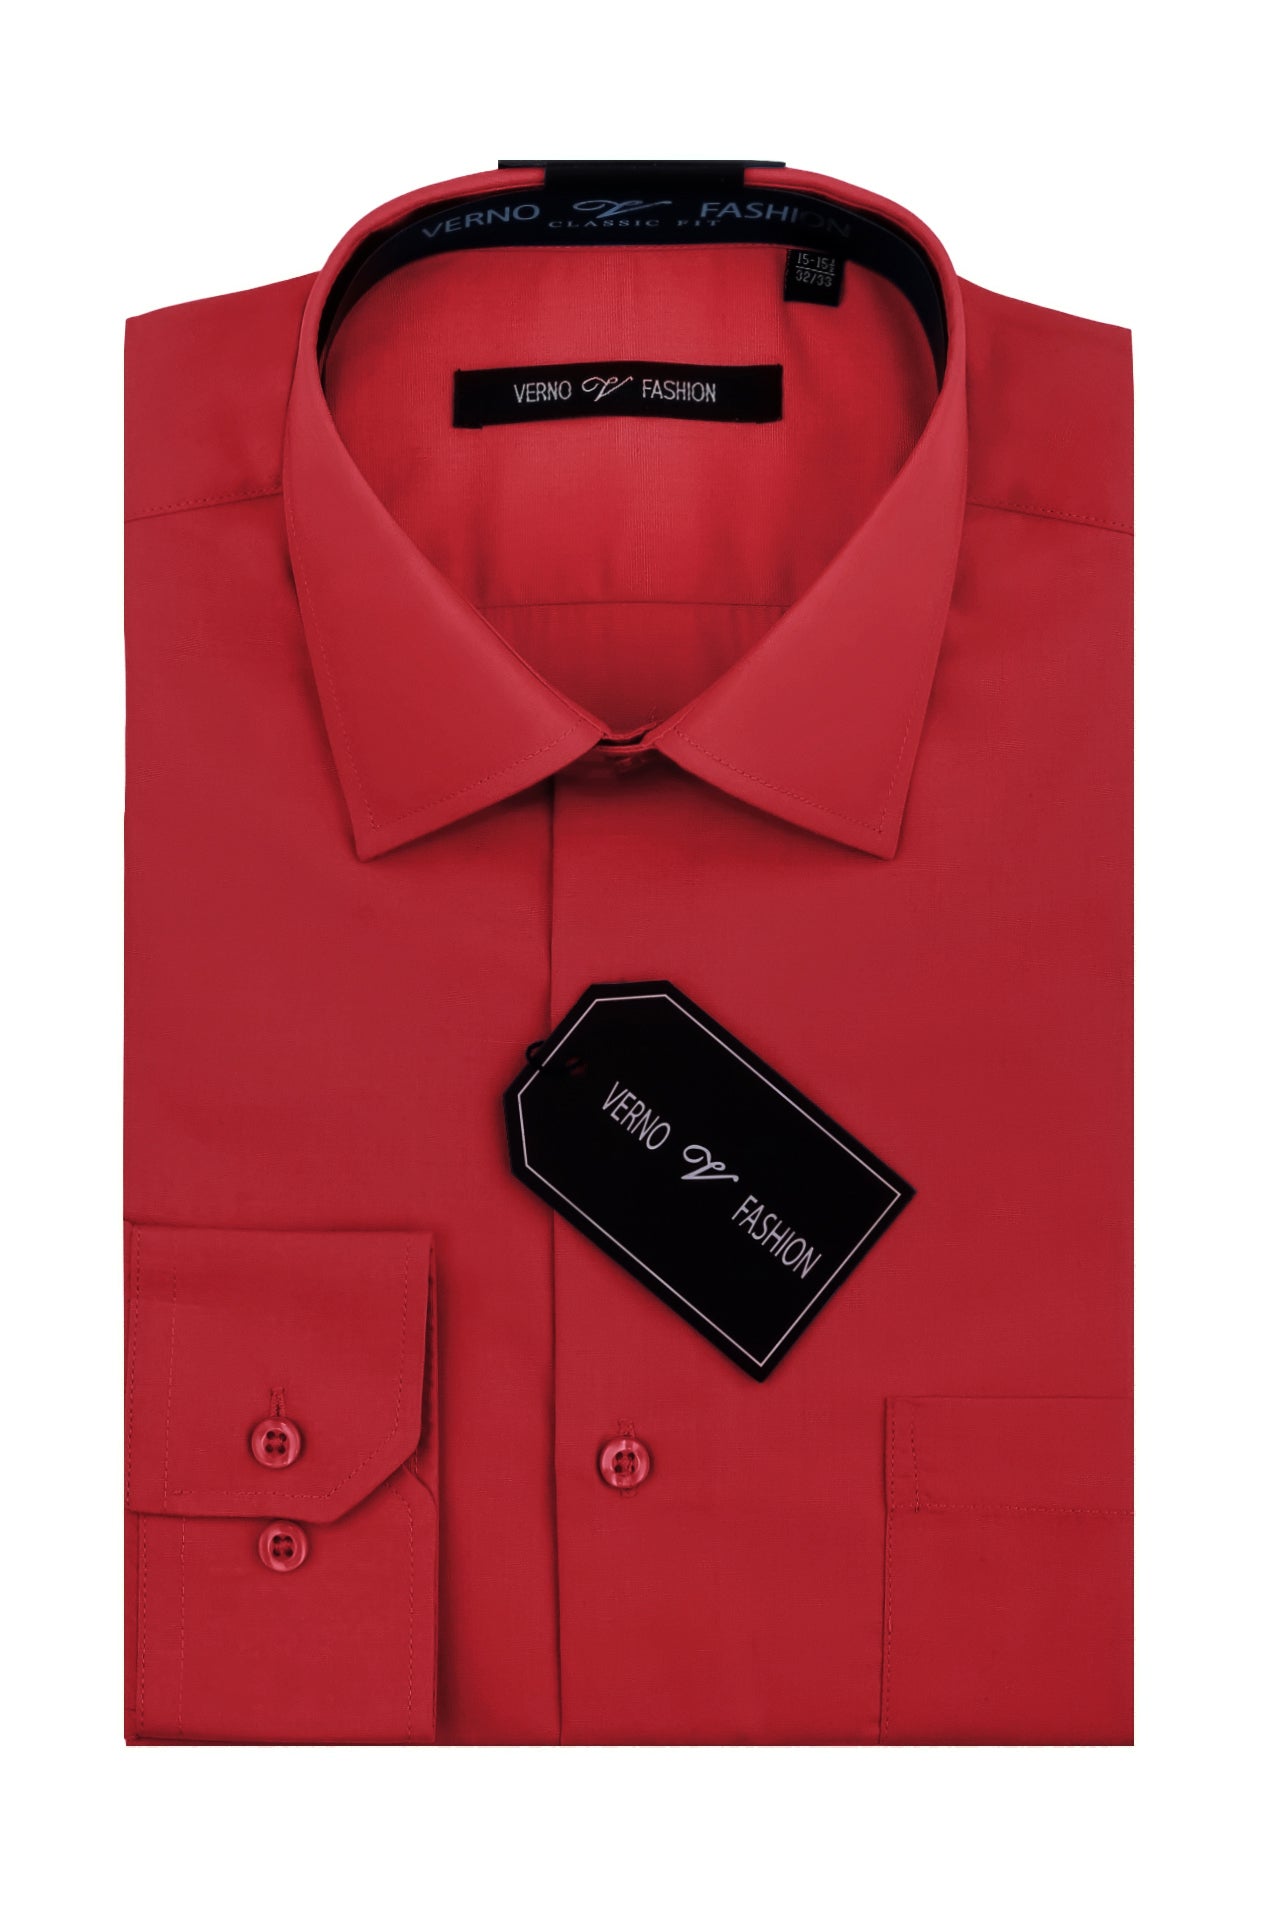 "Cotton Blend Men's Dress Shirt - Regular Fit in Brick Red"